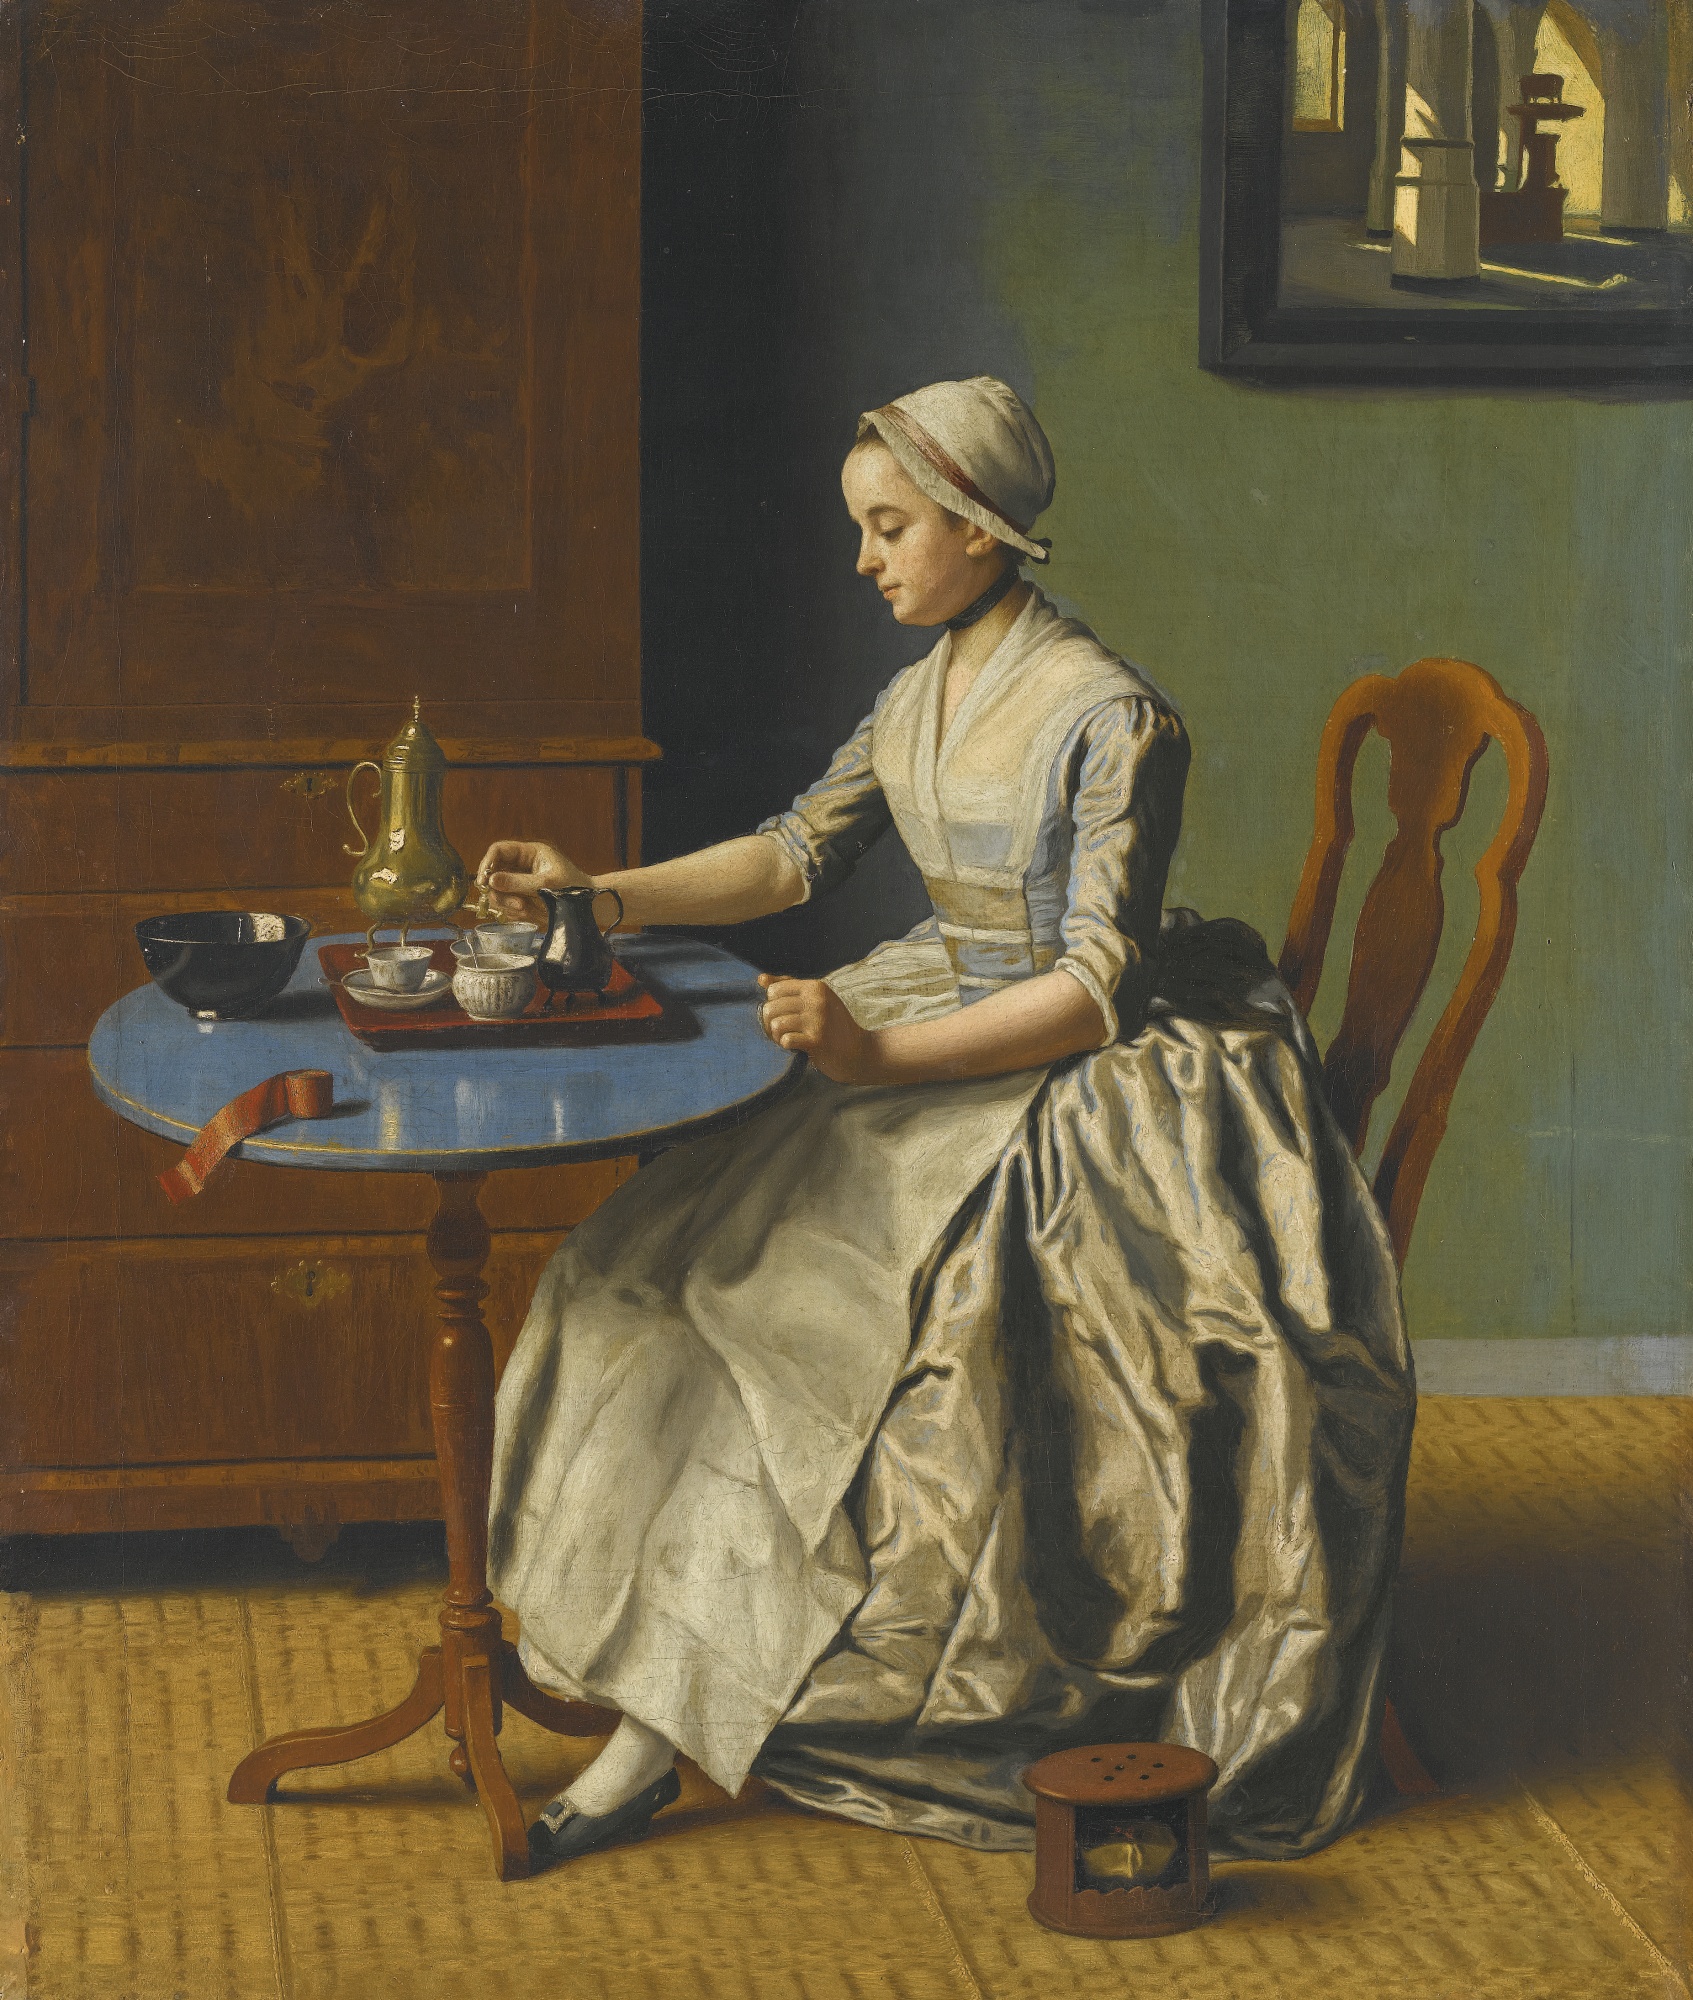 A Dutch girl at breakfast by Jean-Etienne Liotard. Photo: Rijksmuseum